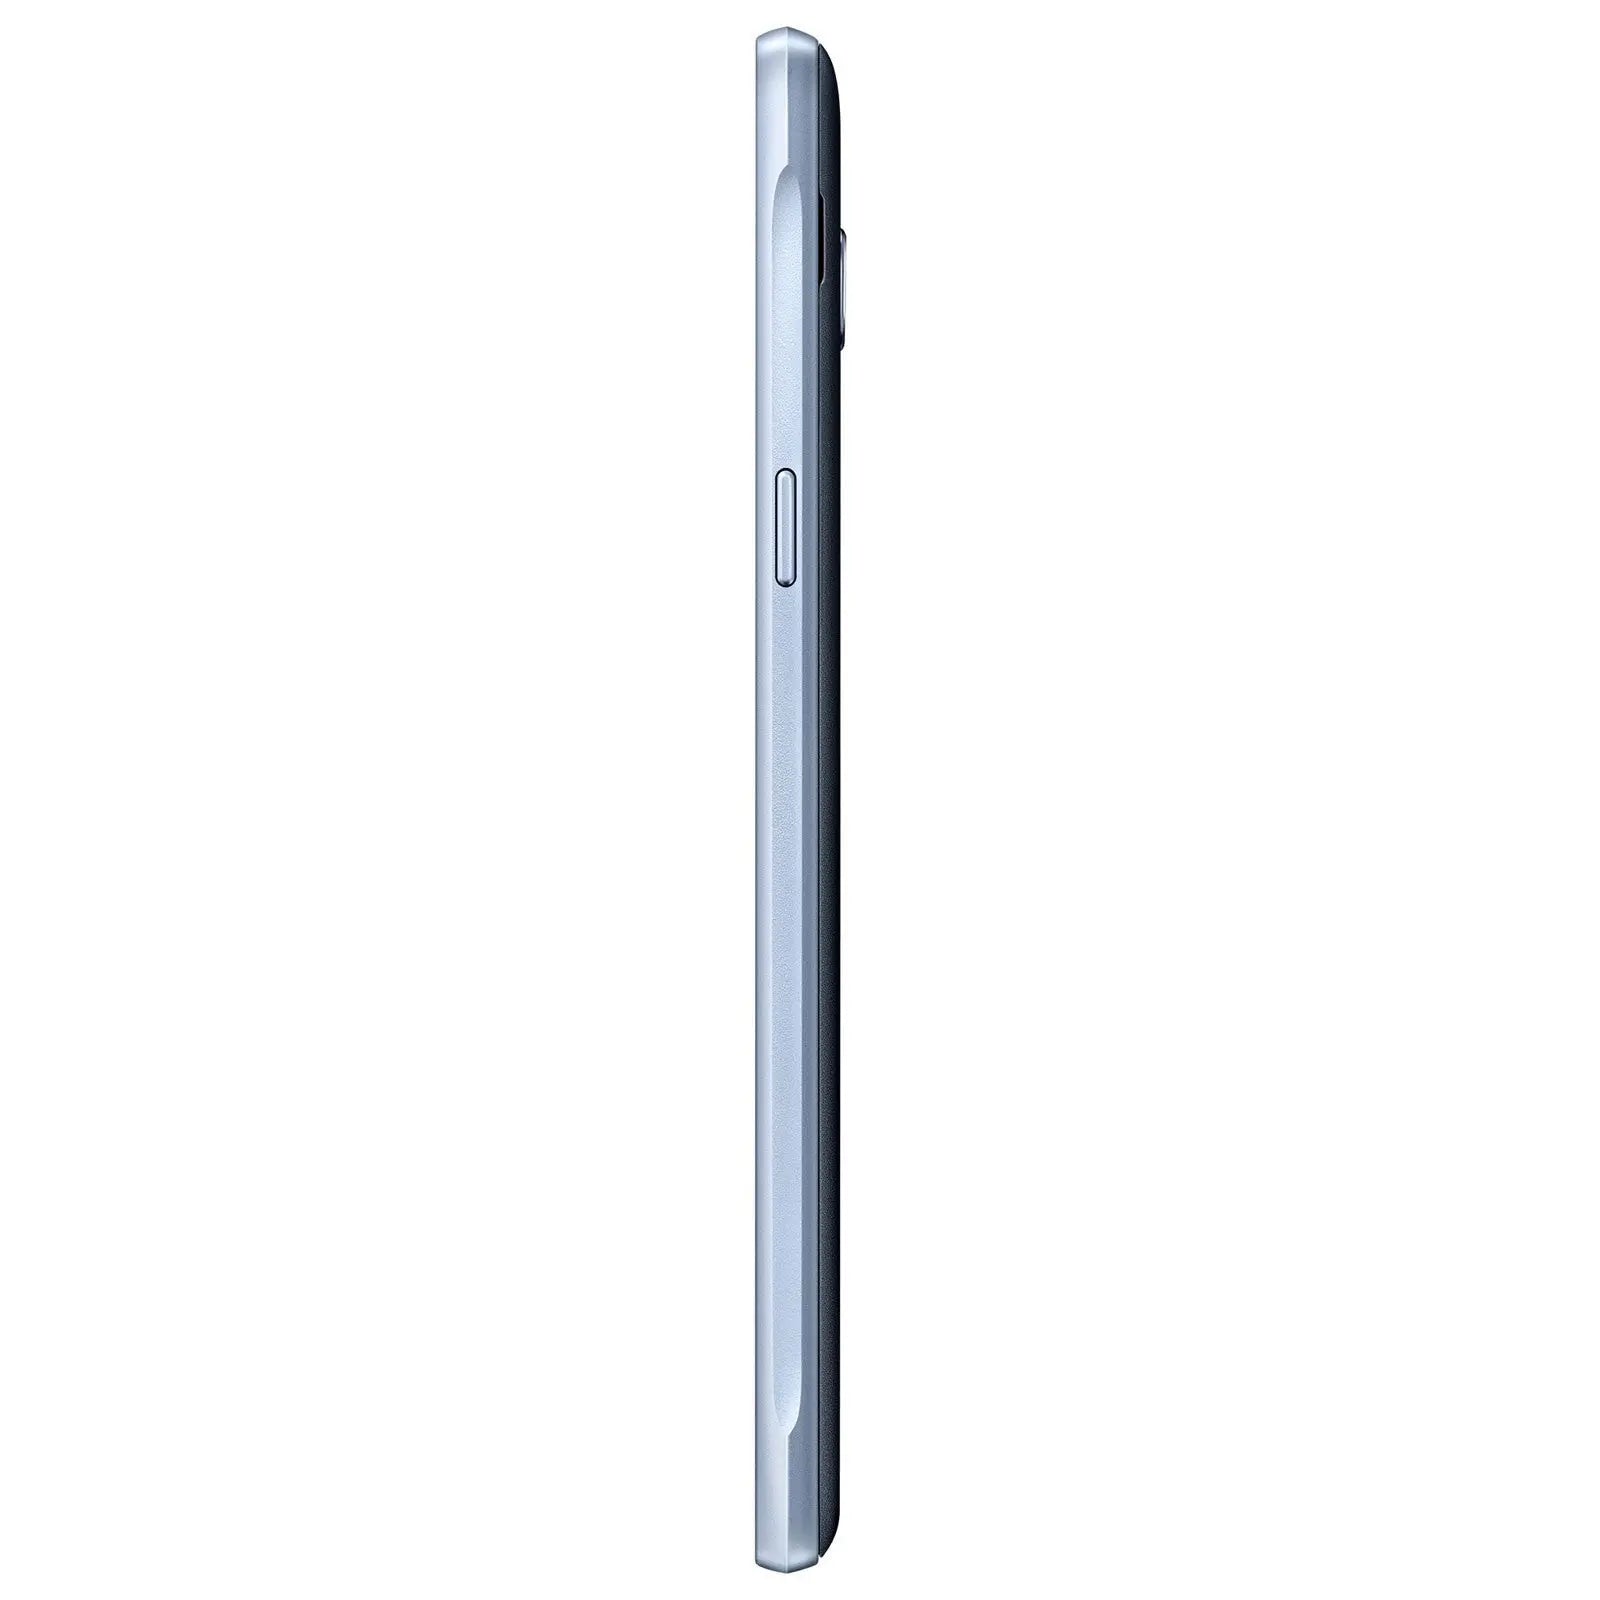 Tablette tactile Samsung Galaxy Tab A 9,7 16 Go Wifi Blanc freeshipping -  Tecin.fr – TECIN HOLDING